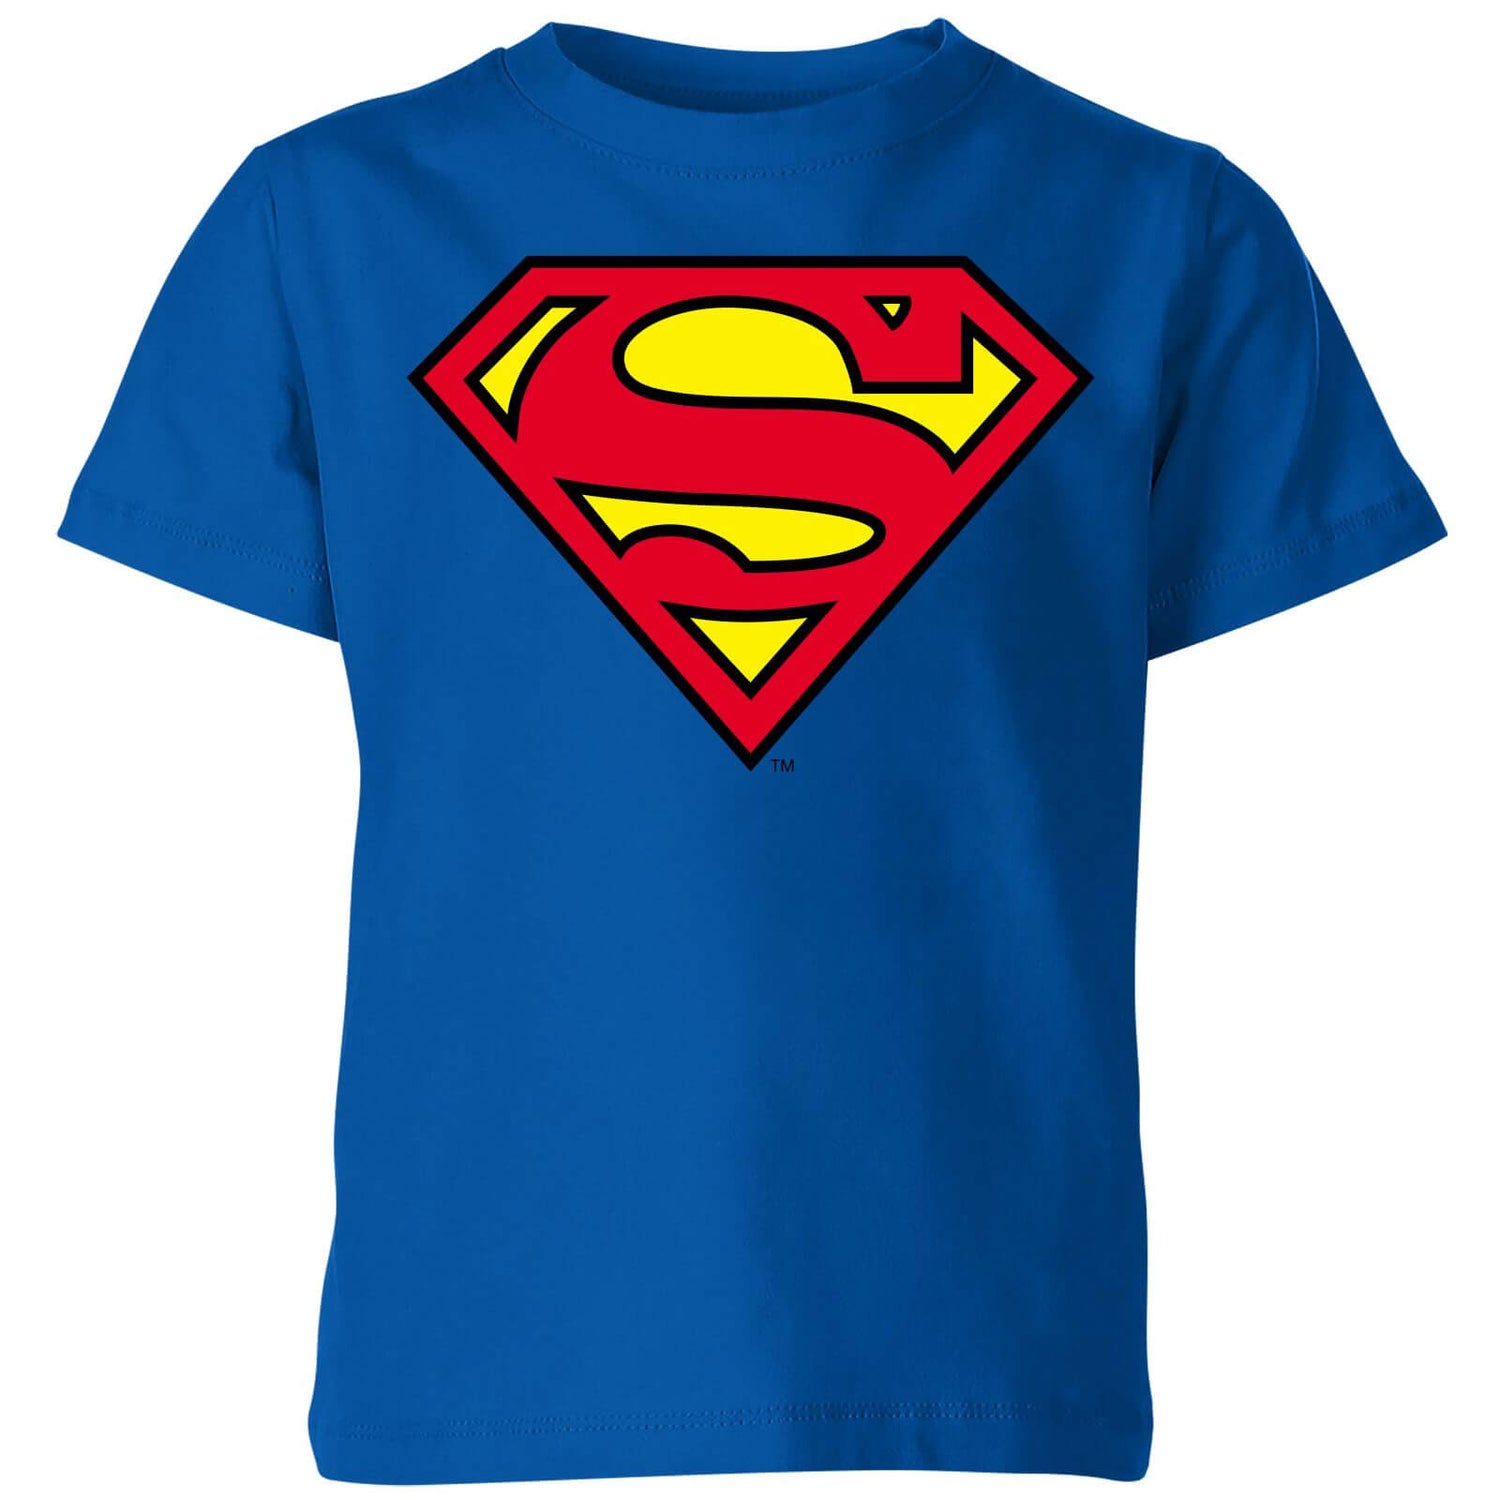 Official Superman Shield Kids' T-Shirt - Blue